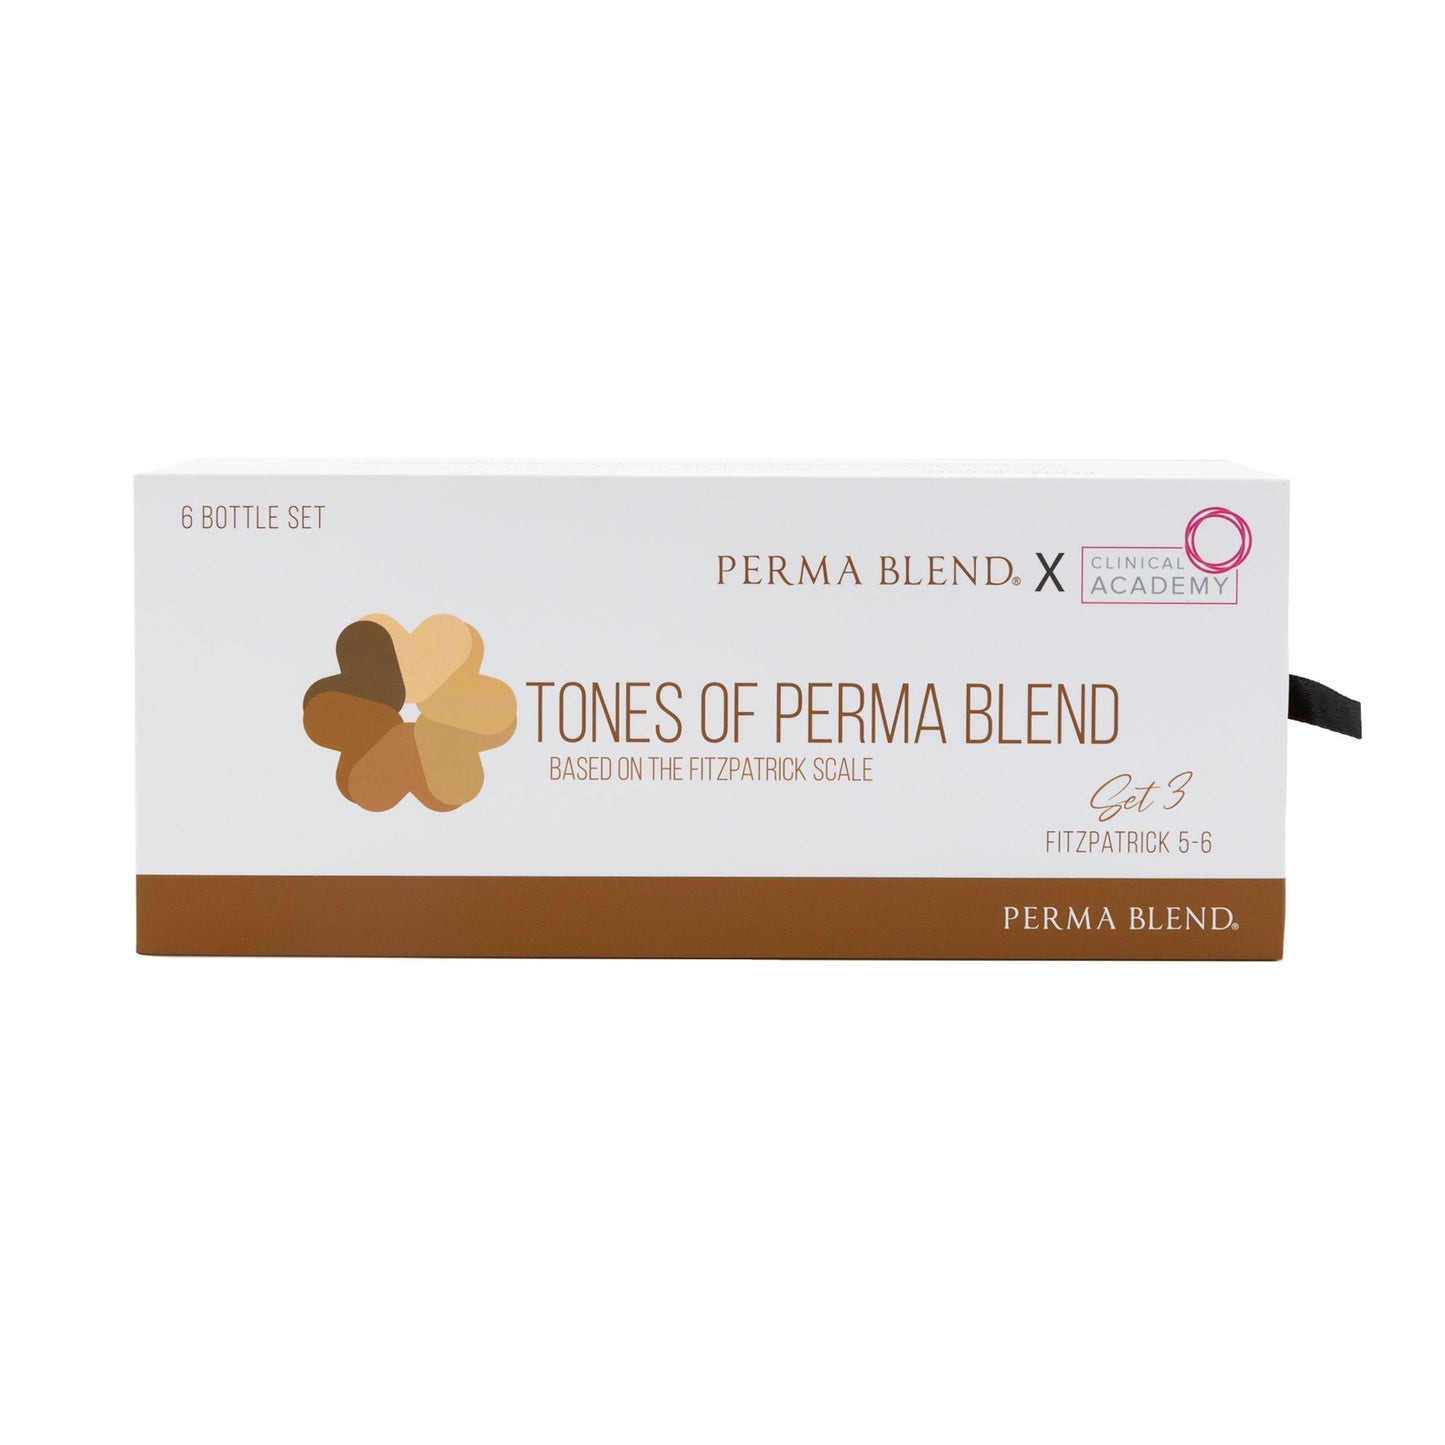 Tones of Perma Blend Fitz 5-6